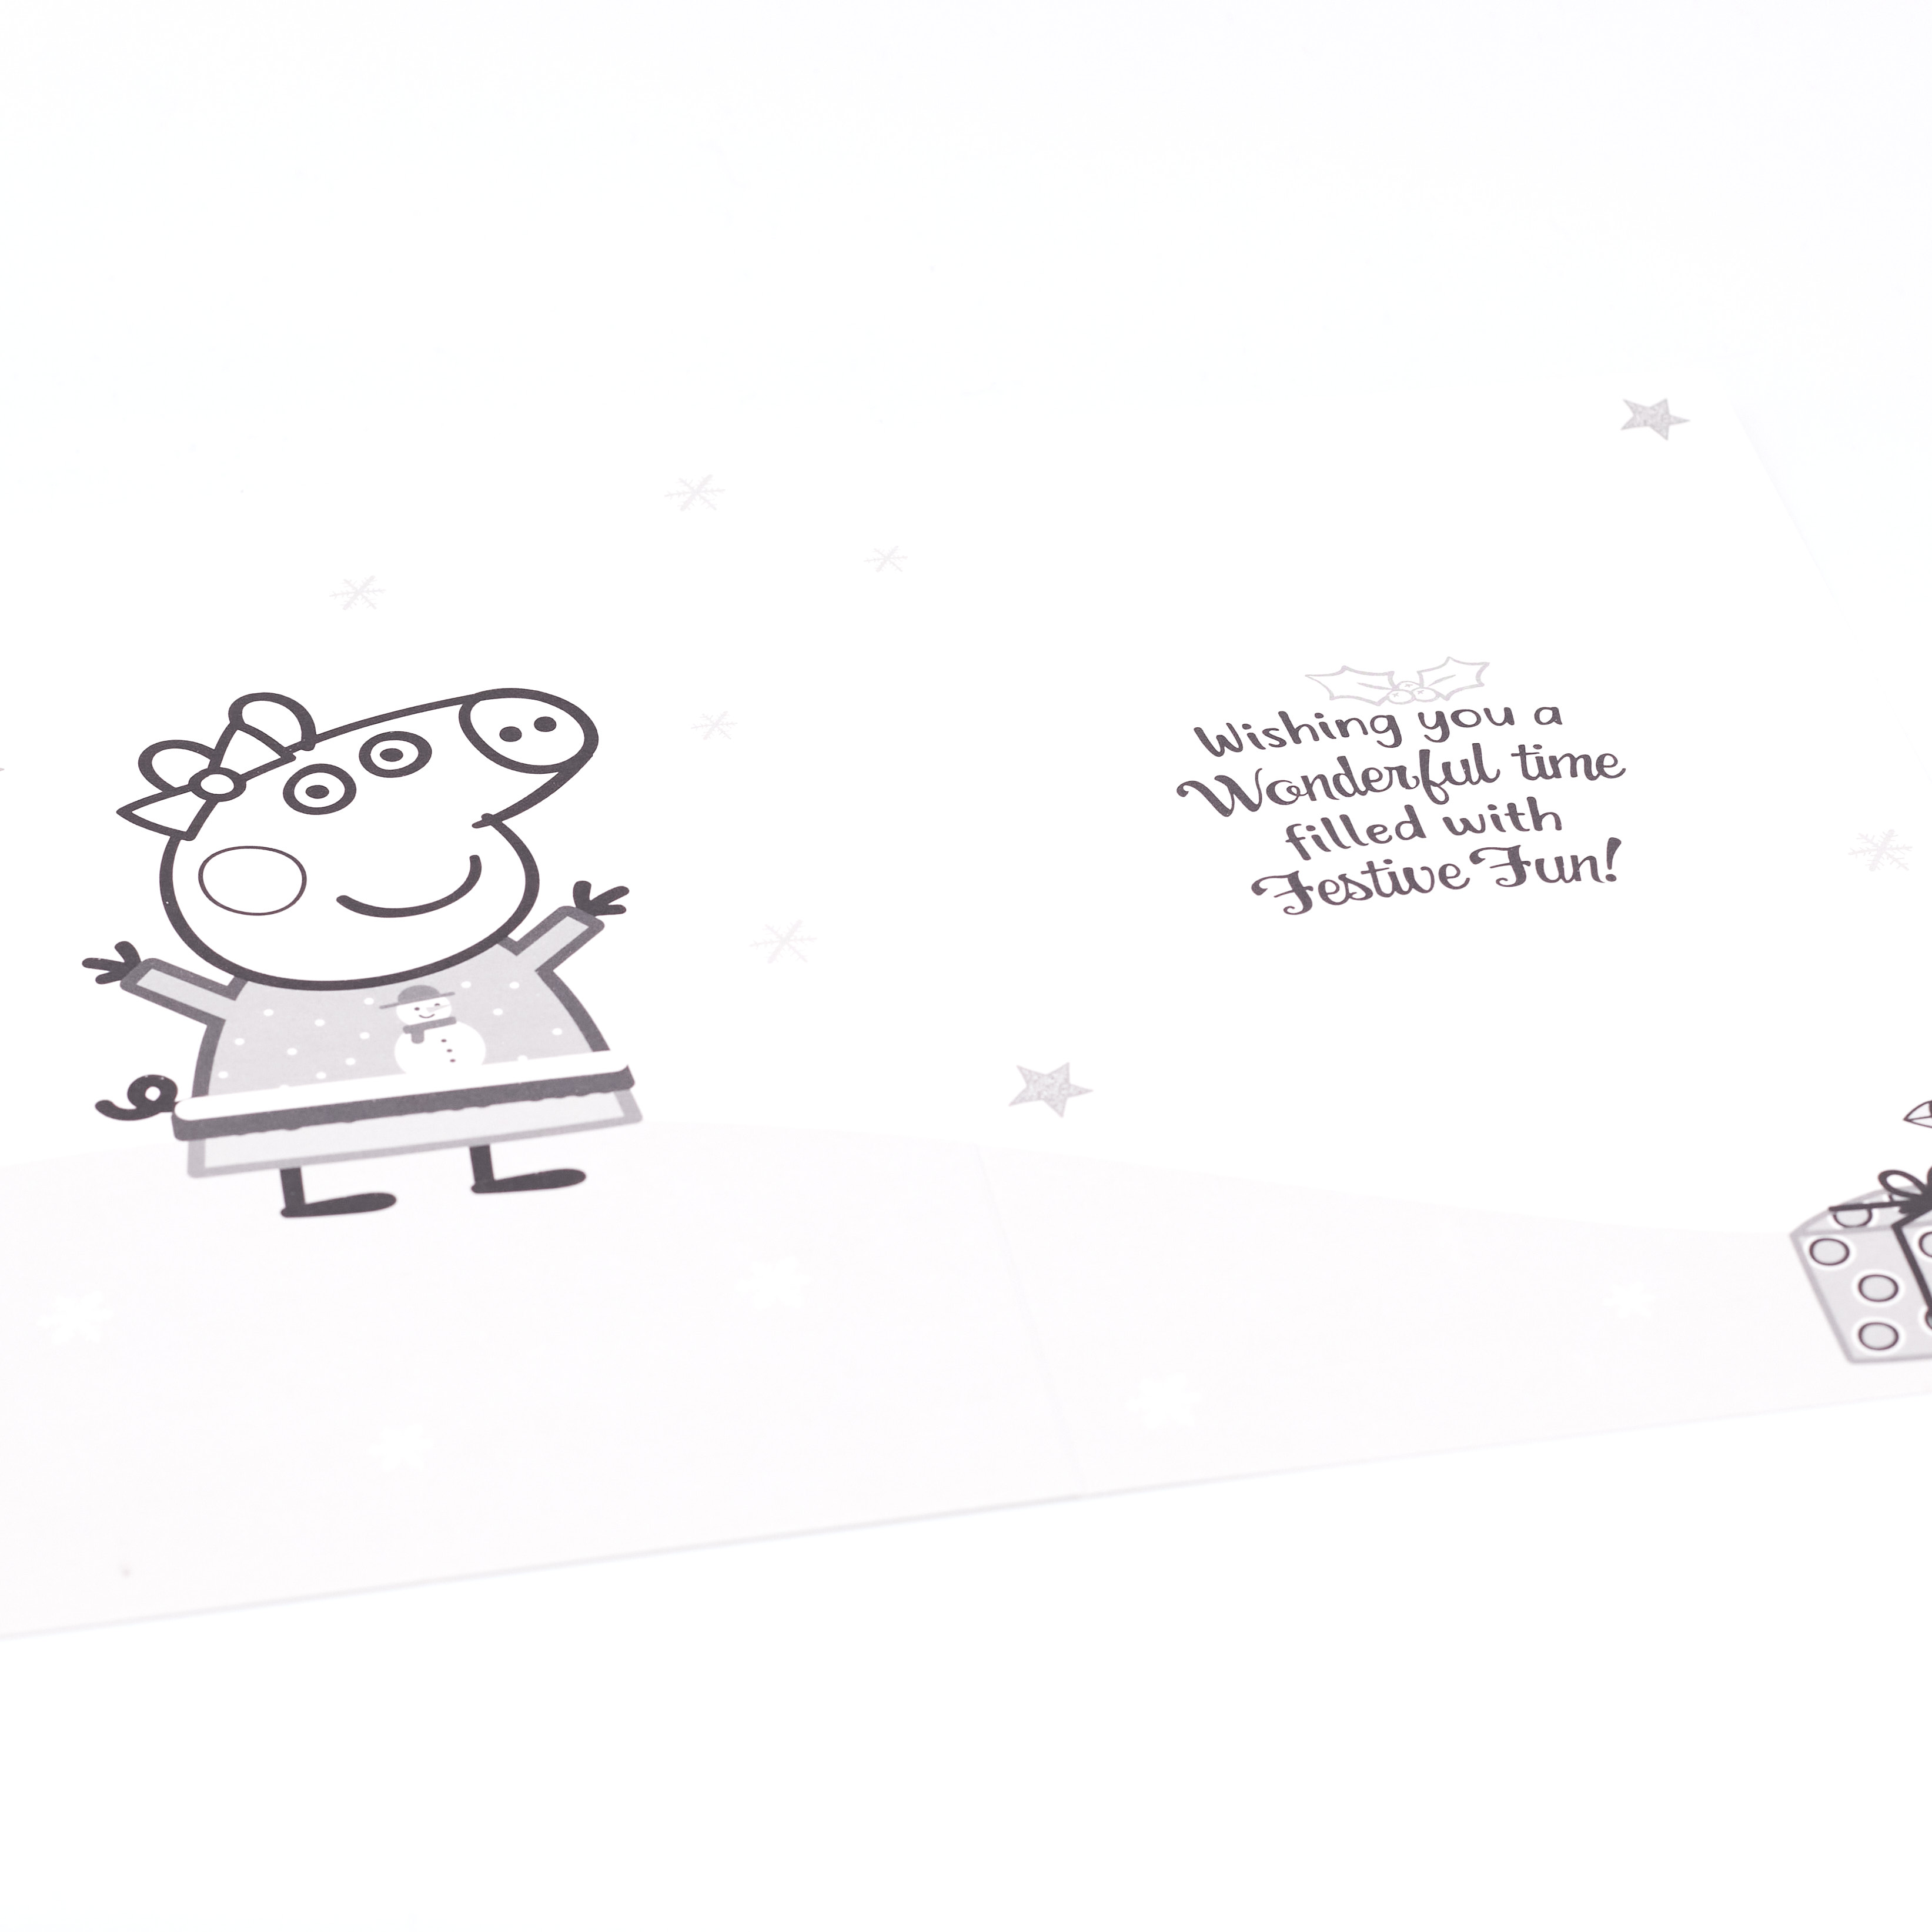 Peppa Pig Christmas Card - Super Sweet Niece